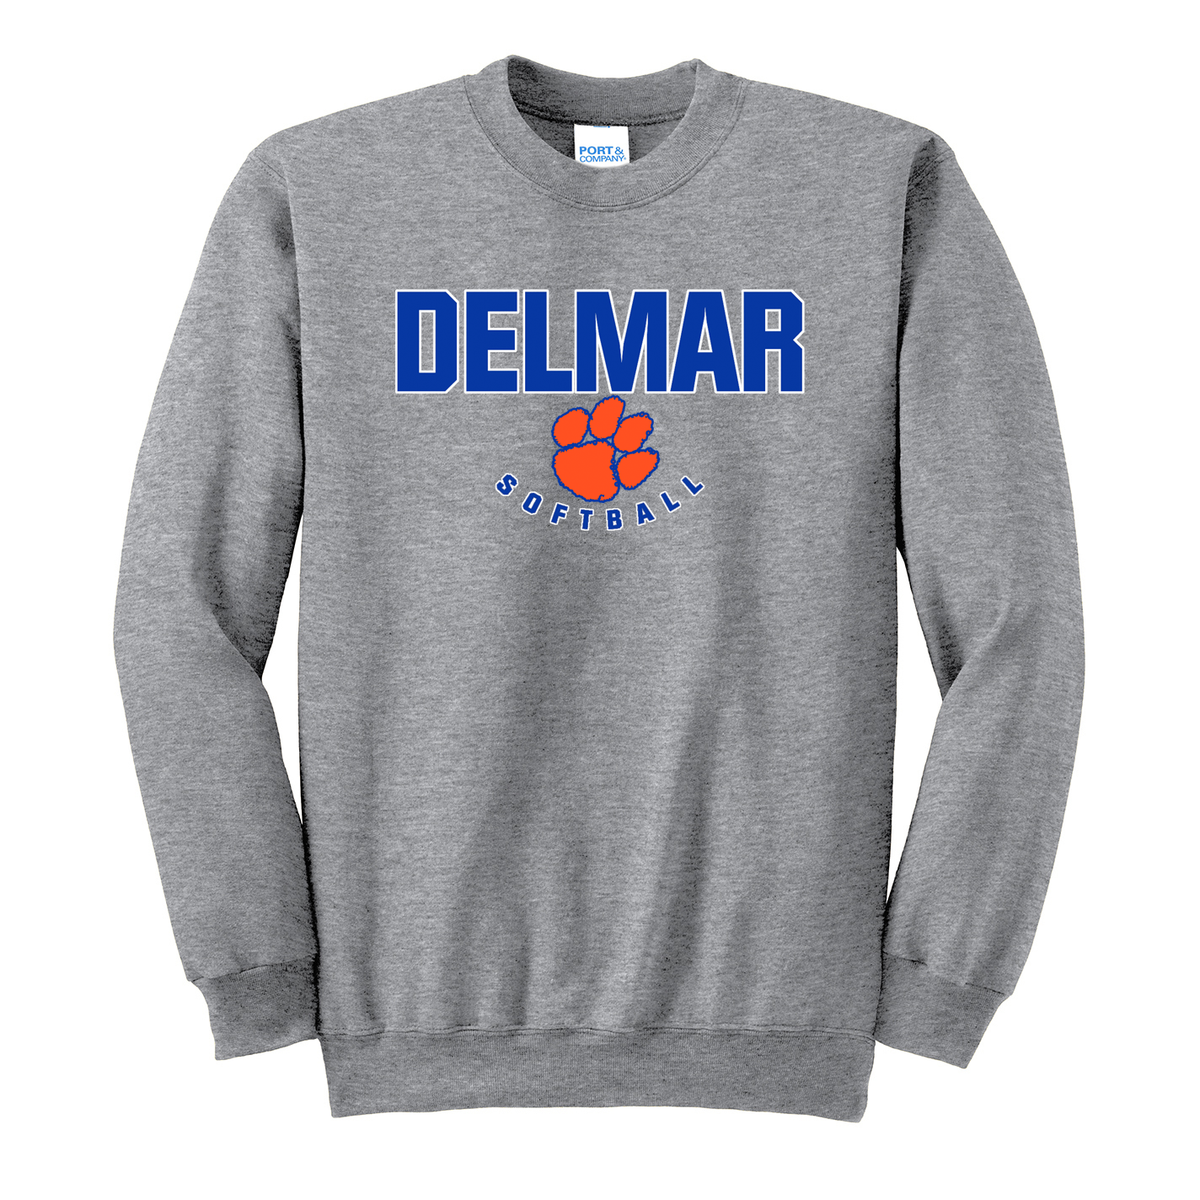 Delmar Softball  Crew Neck Sweater